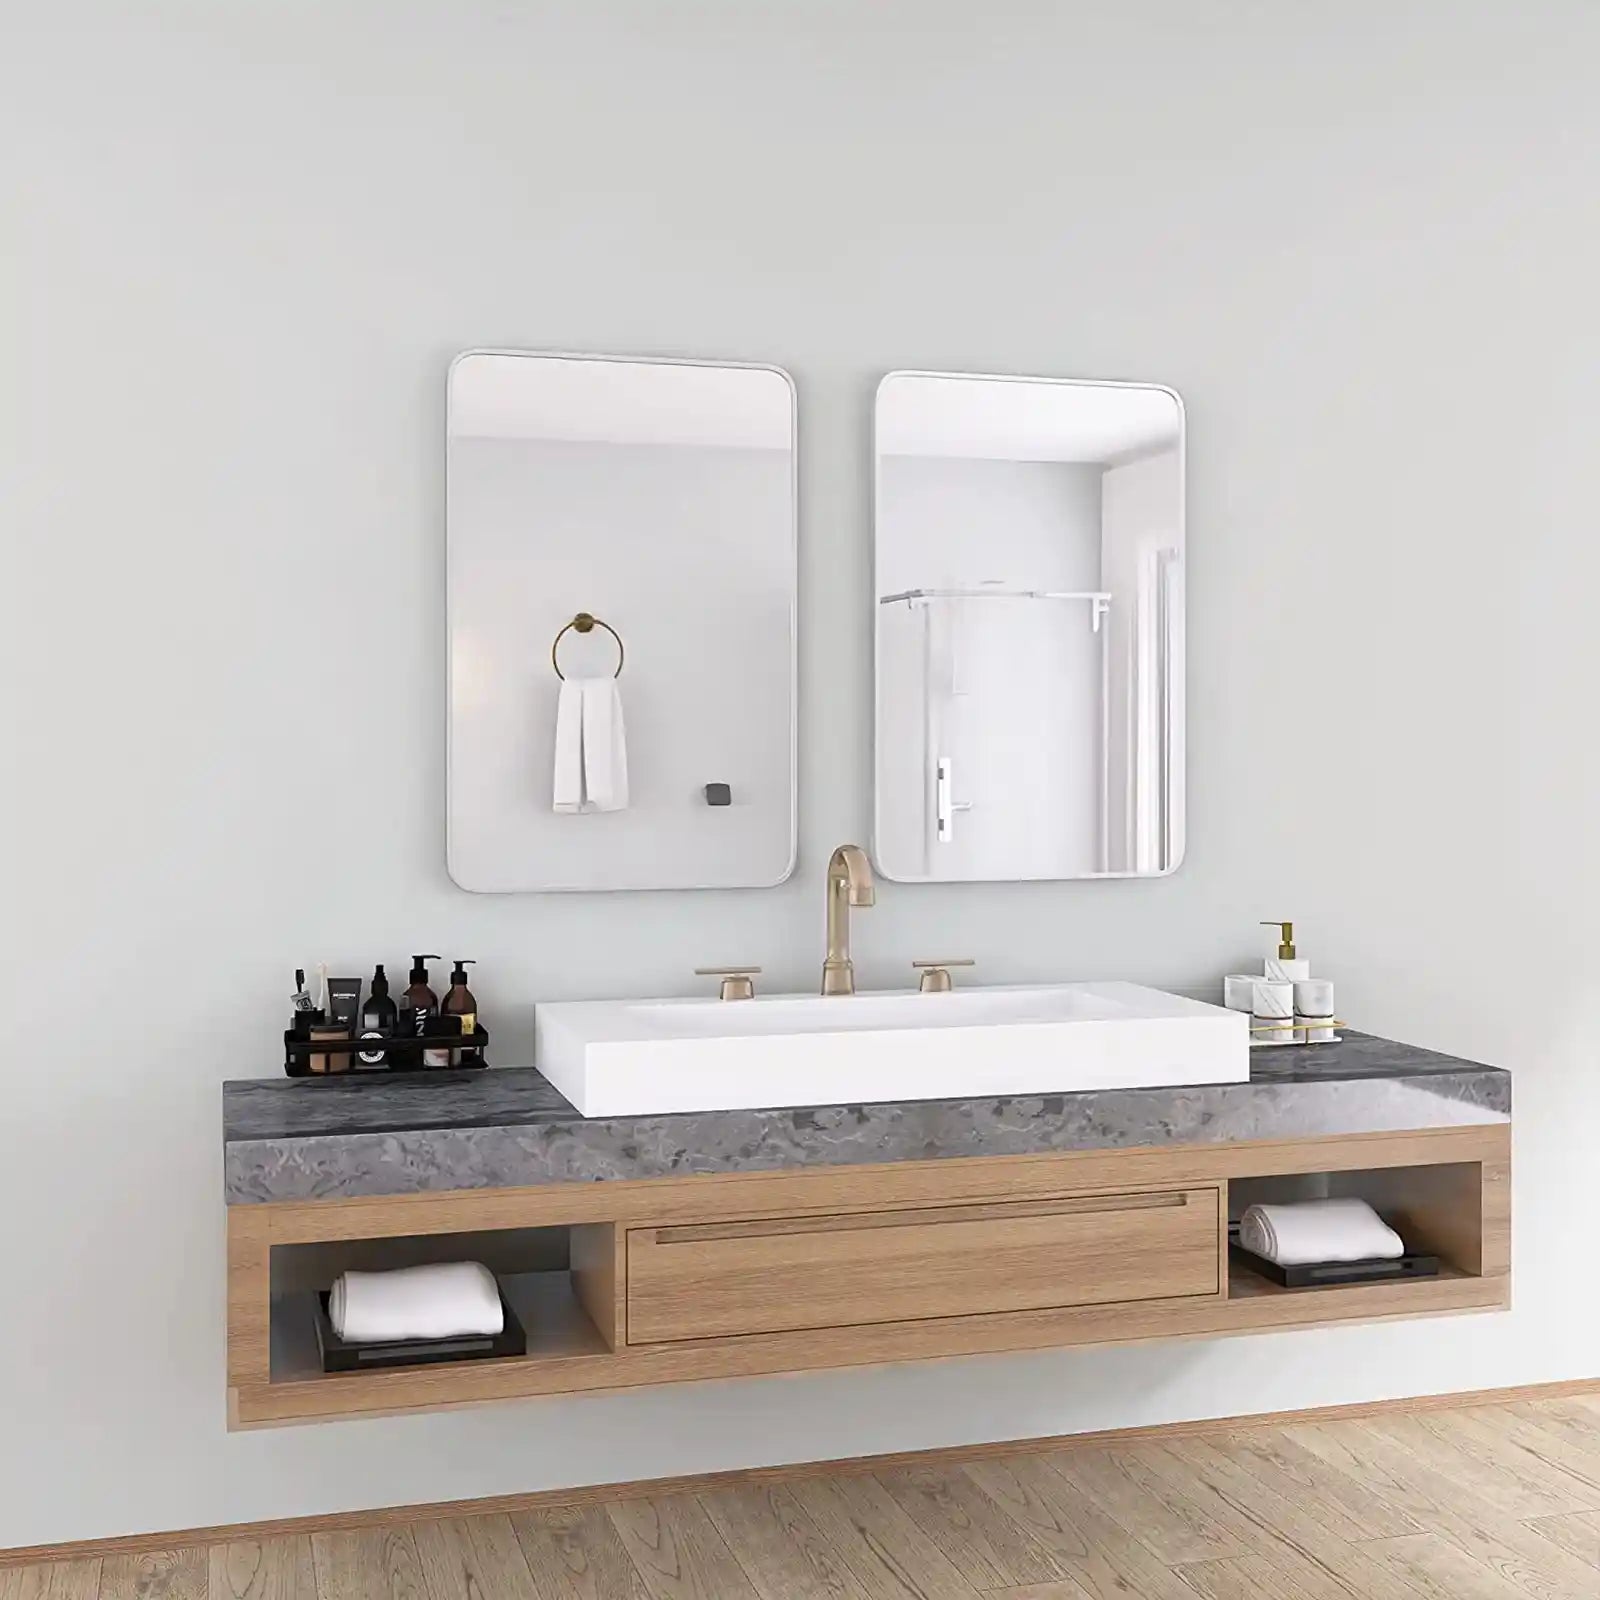 Round Edge Bathroom Mirror, 20"x30" Rectangular Bathroom Mirror for Wall, Black Wall Mounted Bathroom Vanity Mirror for Living Room, Bedroom, Entryway